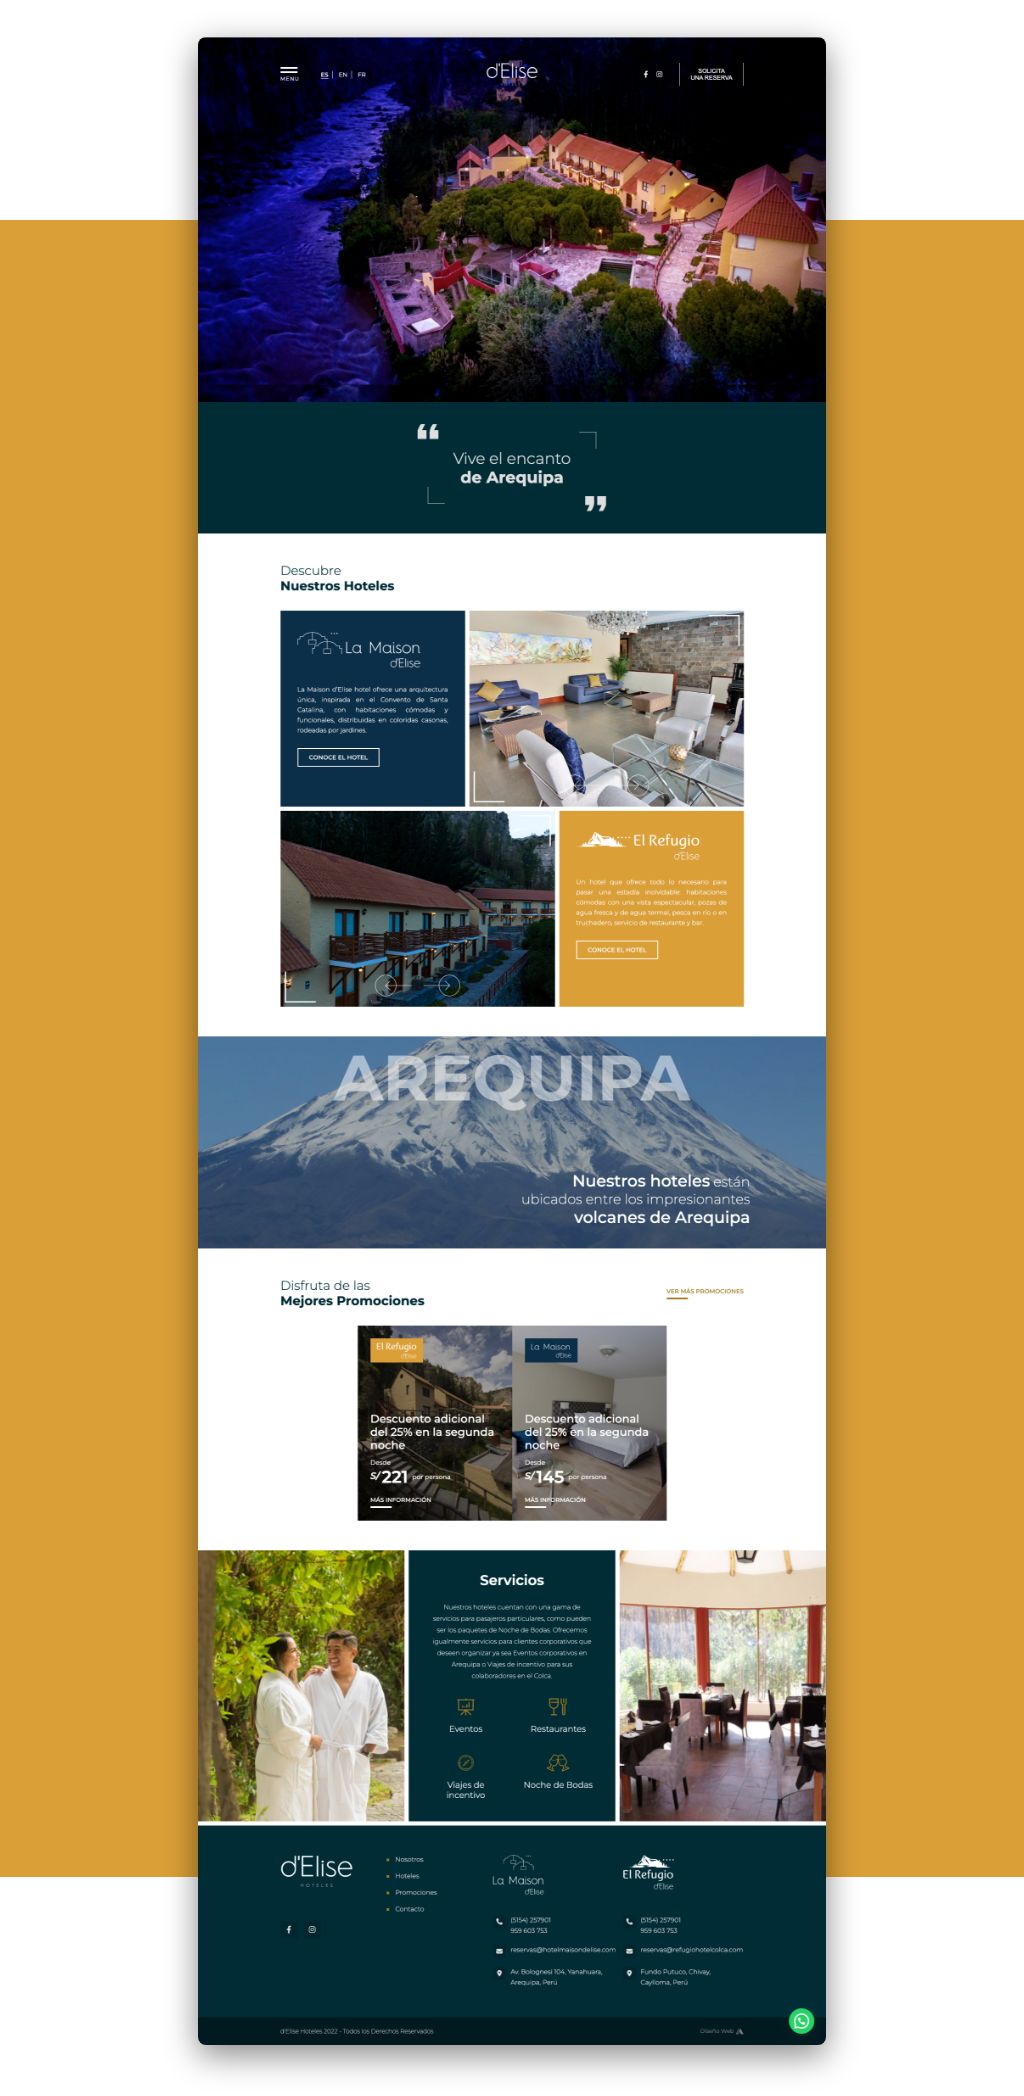 aurico-web-delise-hoteles-paginas-web-alfredo-diseno-web-alfredo-diaz-marin-responsive-design-redes-sociales-9